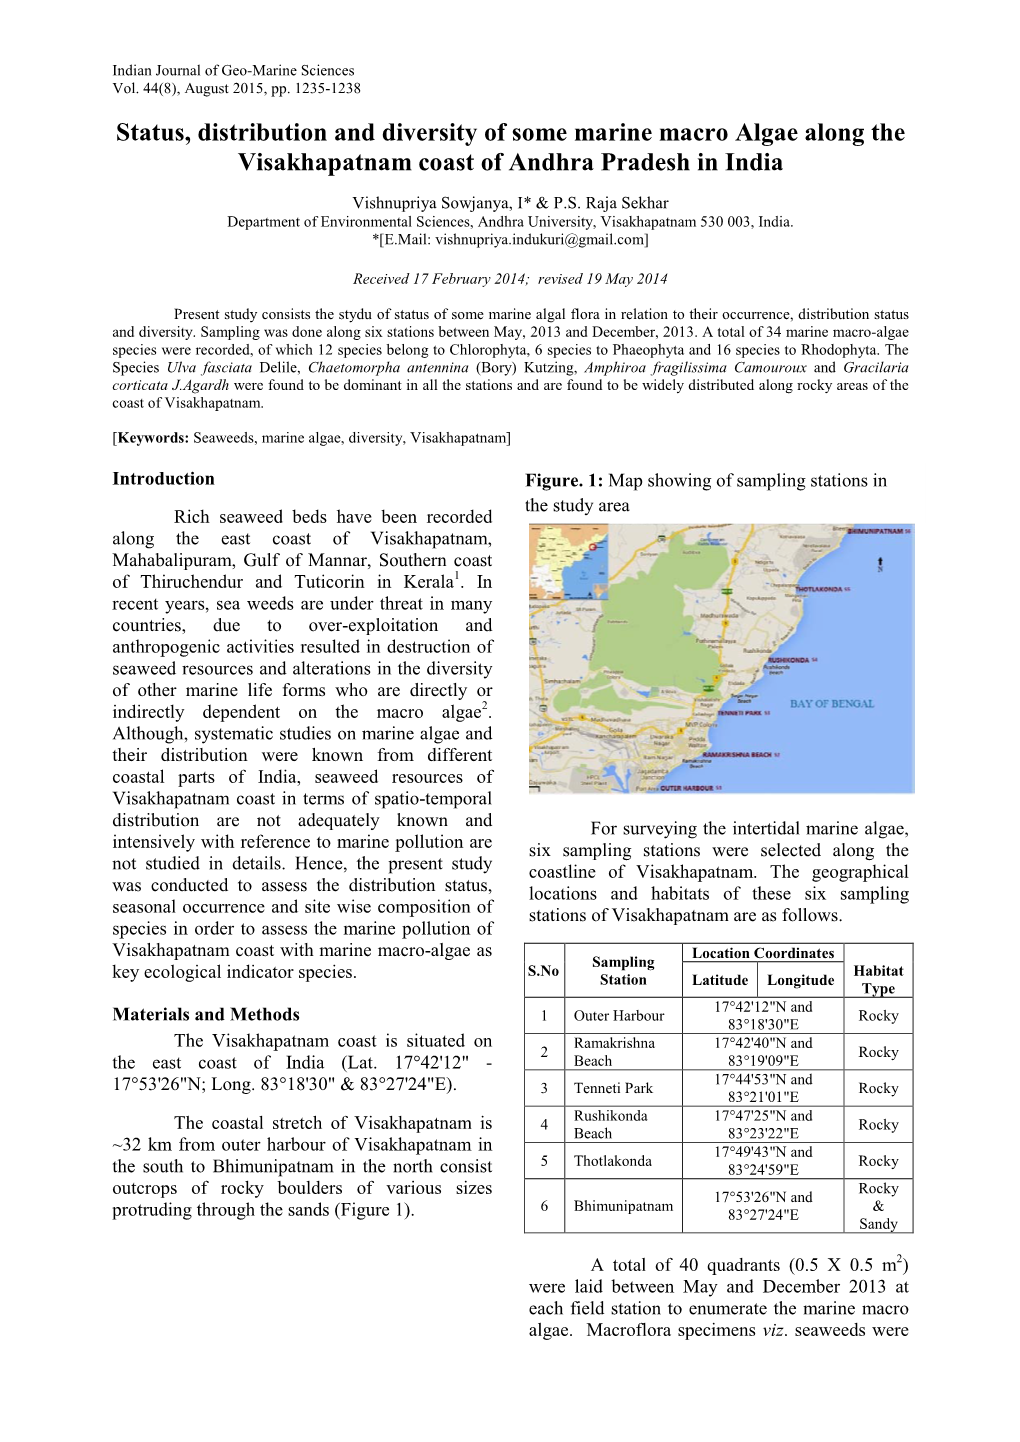 Status, Distribution and Diversity of Some Marine Macro Algae Along the Visakhapatnam Coast of Andhra Pradesh in India